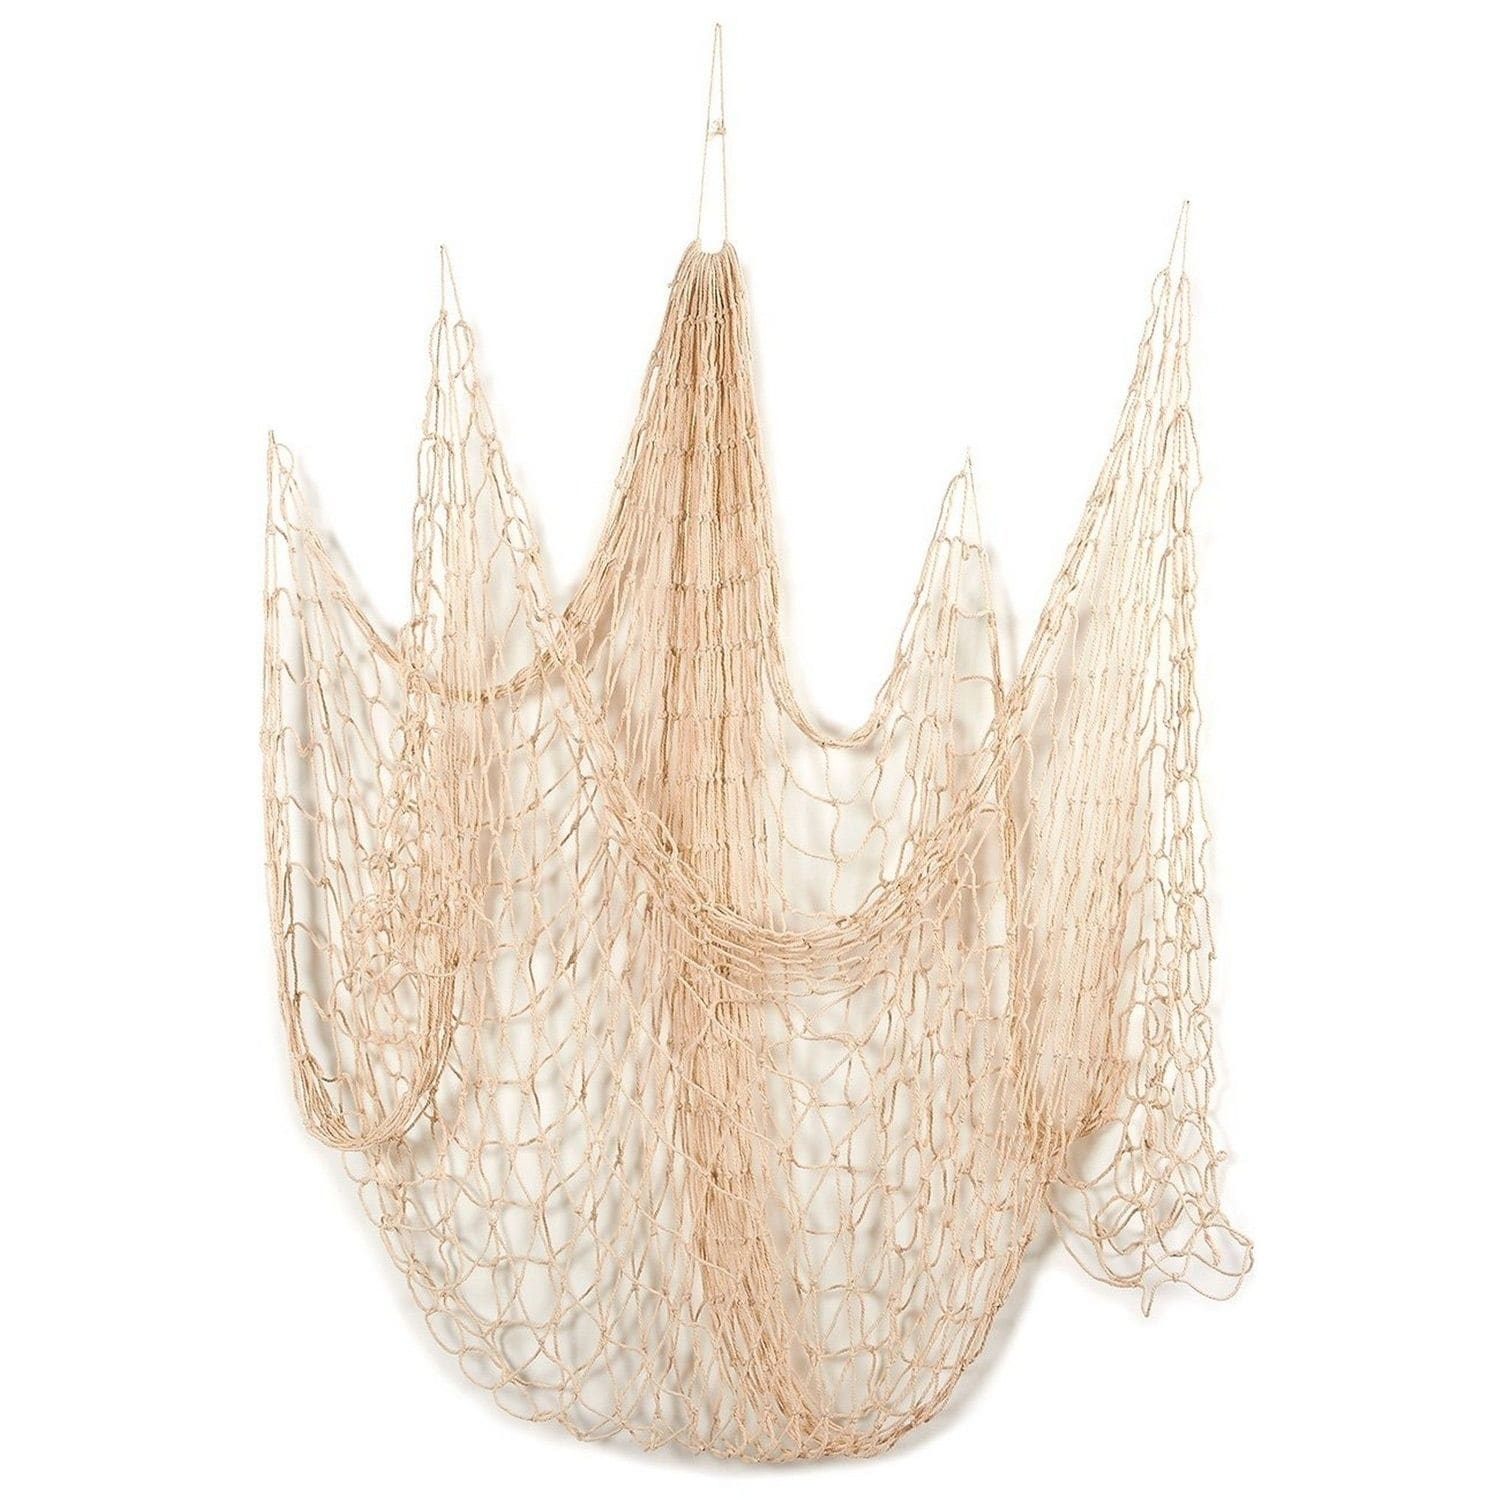 1x2m Natural Decorative Fishing Net